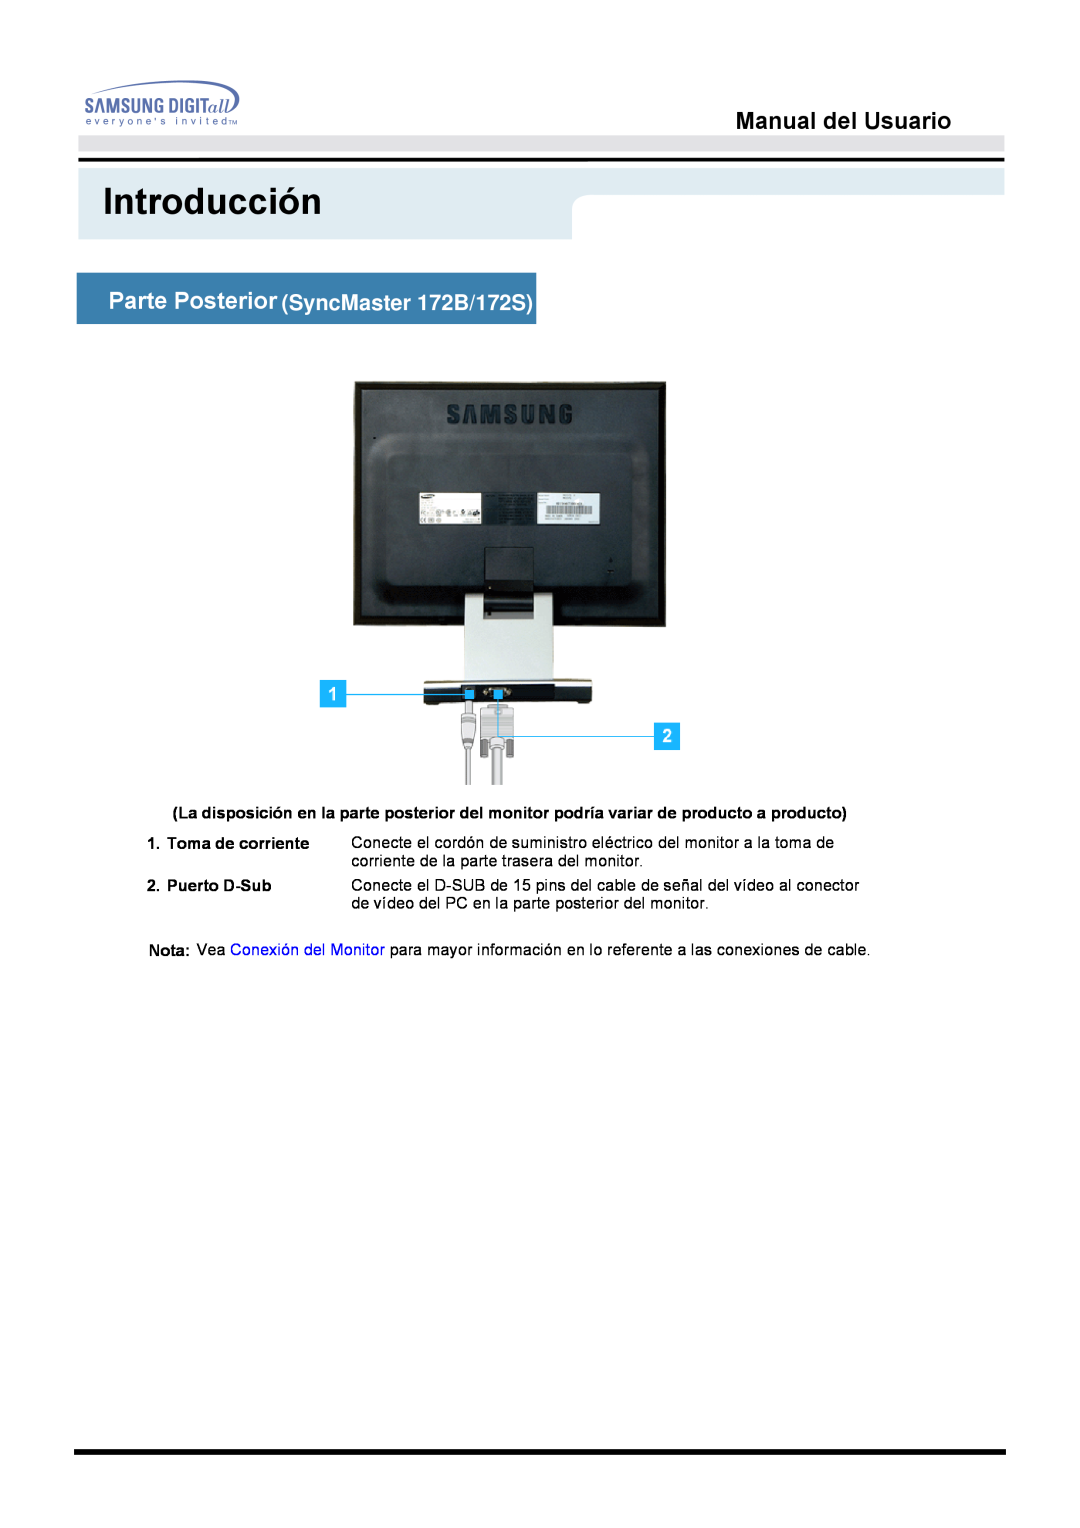 Samsung MO17ESDSZ/EDC, MO17ESZSZ/EDC Parte Posterior SyncMaster 172B/172S, Introducción, Manual del Usuario, Puerto D-Sub 